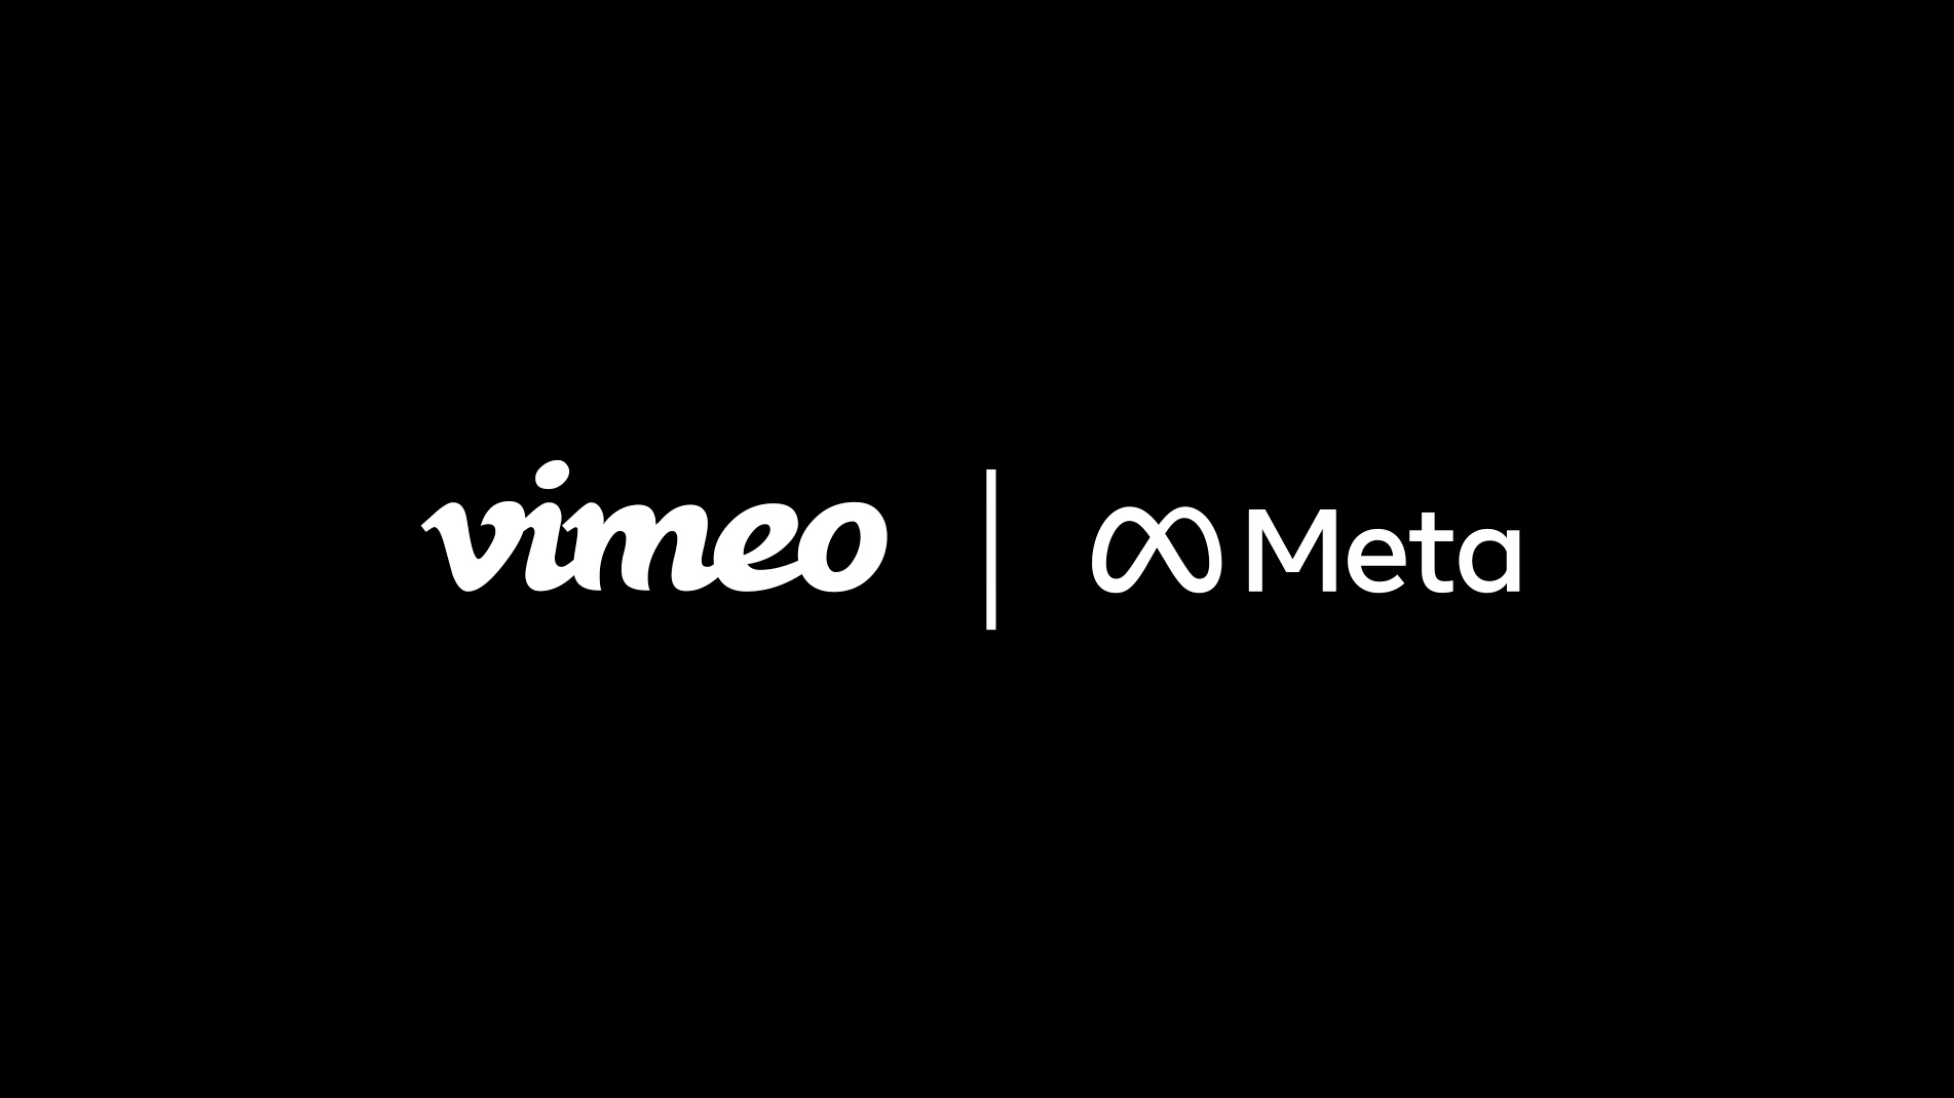 Vimeo logo and Meta logo